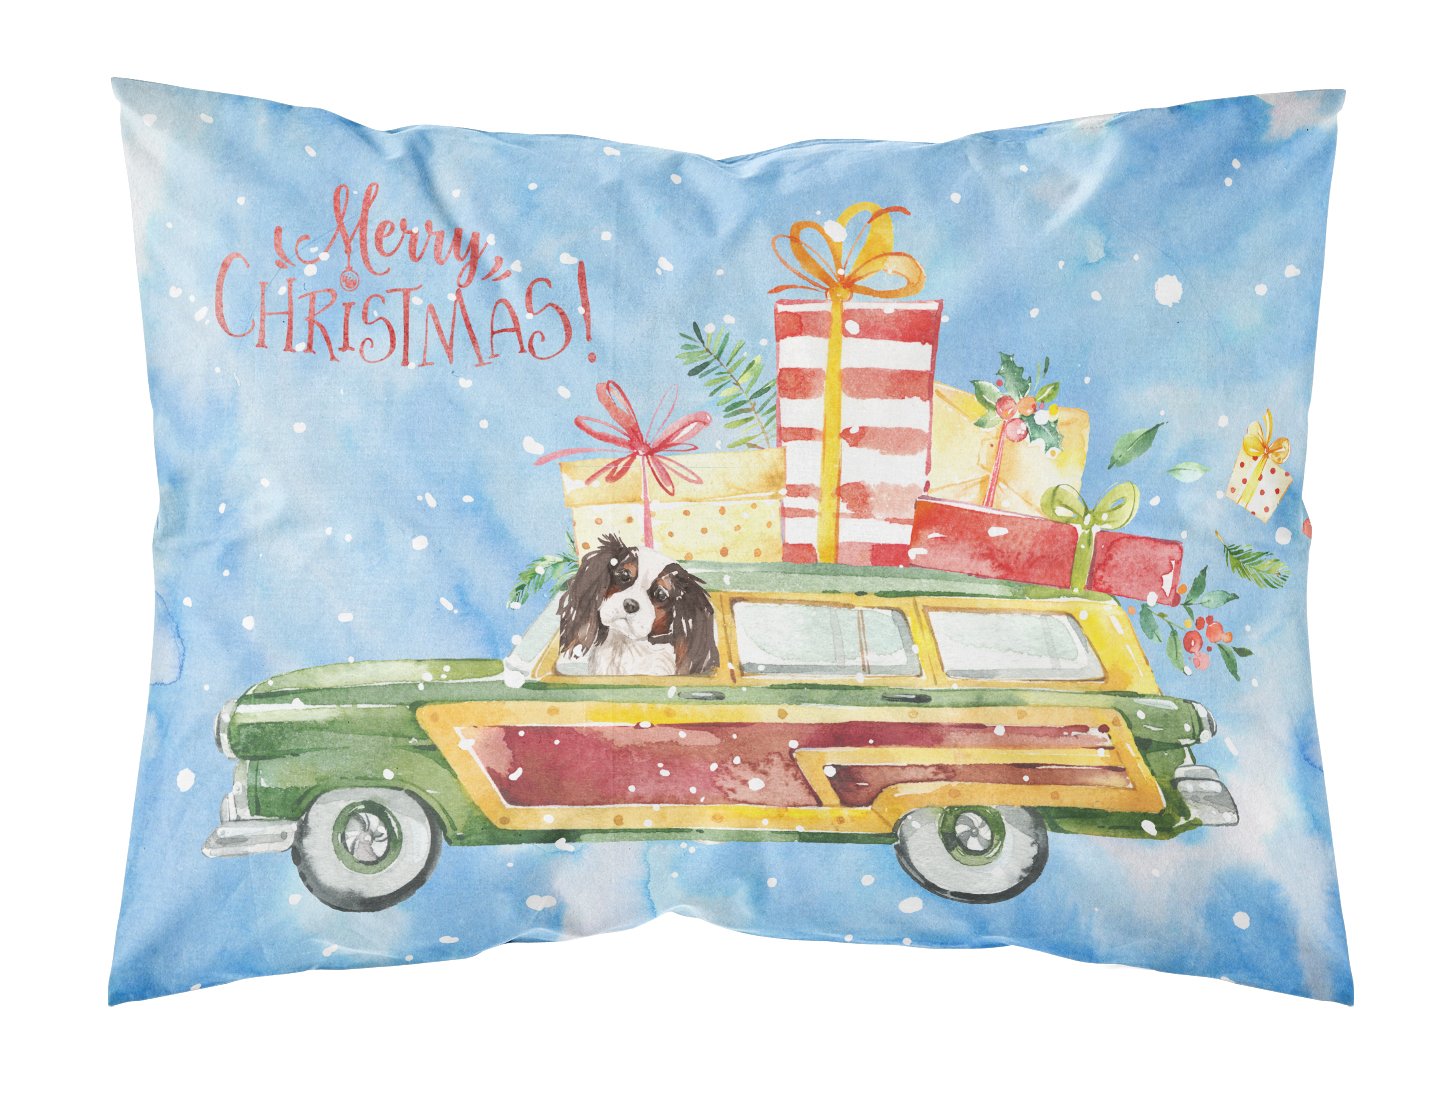 Merry Christmas Tricolor Cavalier Spaniel Fabric Standard Pillowcase CK2440PILLOWCASE by Caroline's Treasures